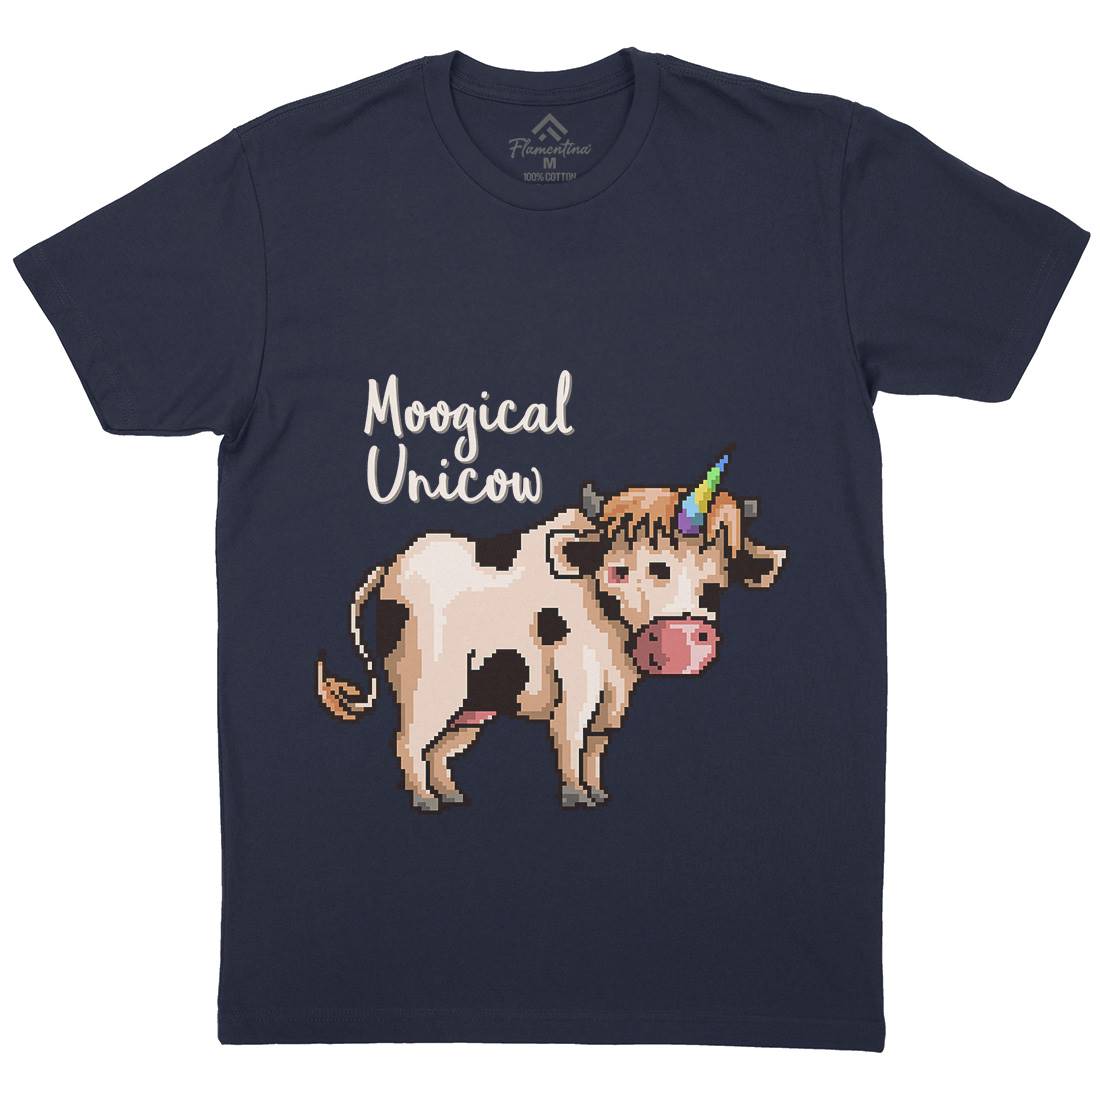 Moogical Unicow Mens Crew Neck T-Shirt Animals B933